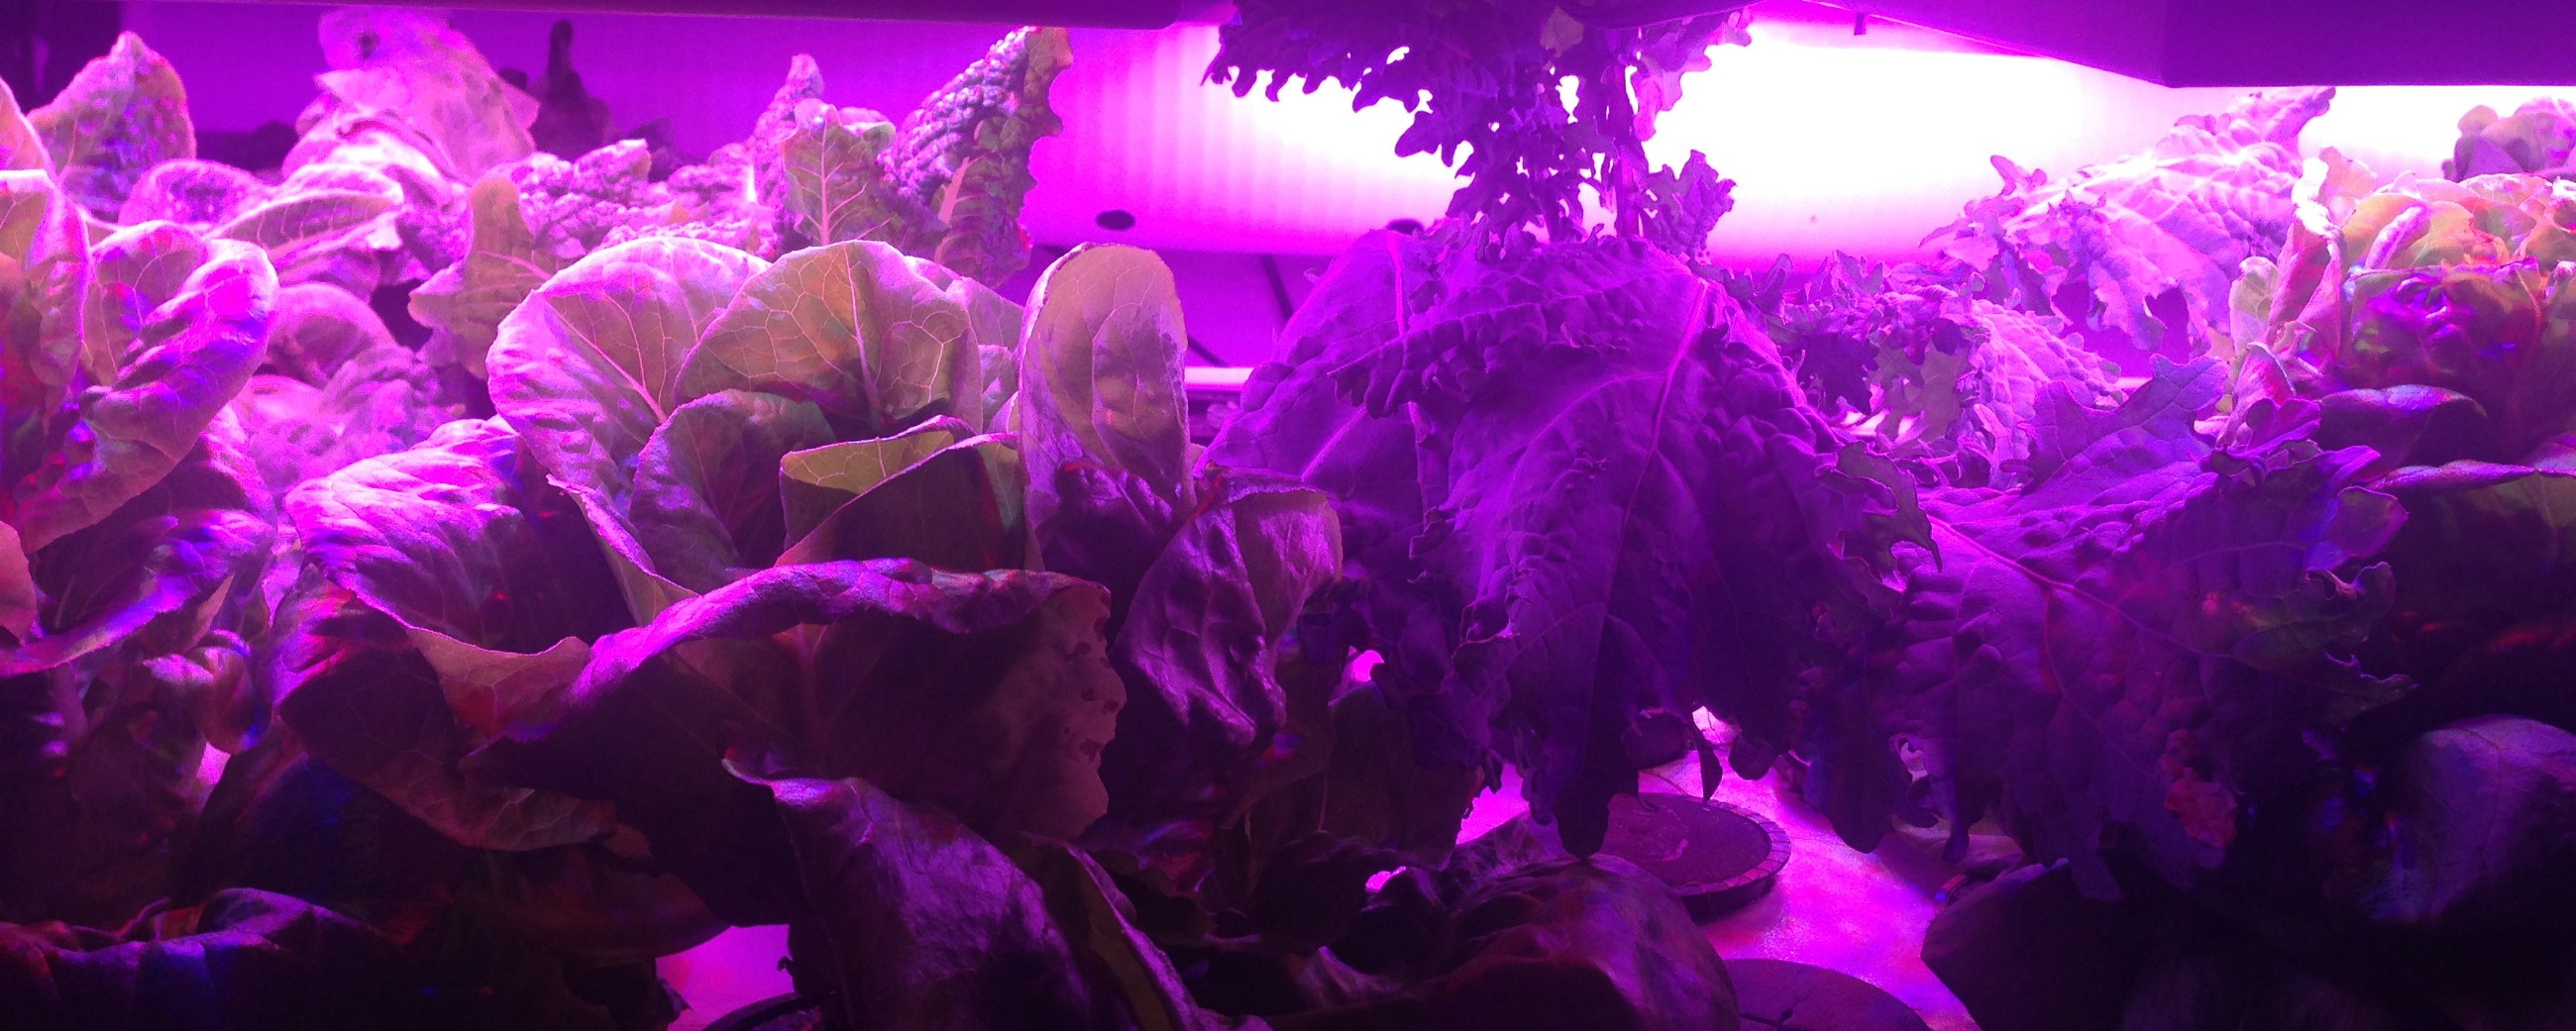 Salads growing under purple LED lights in a hydroponic urban farm.